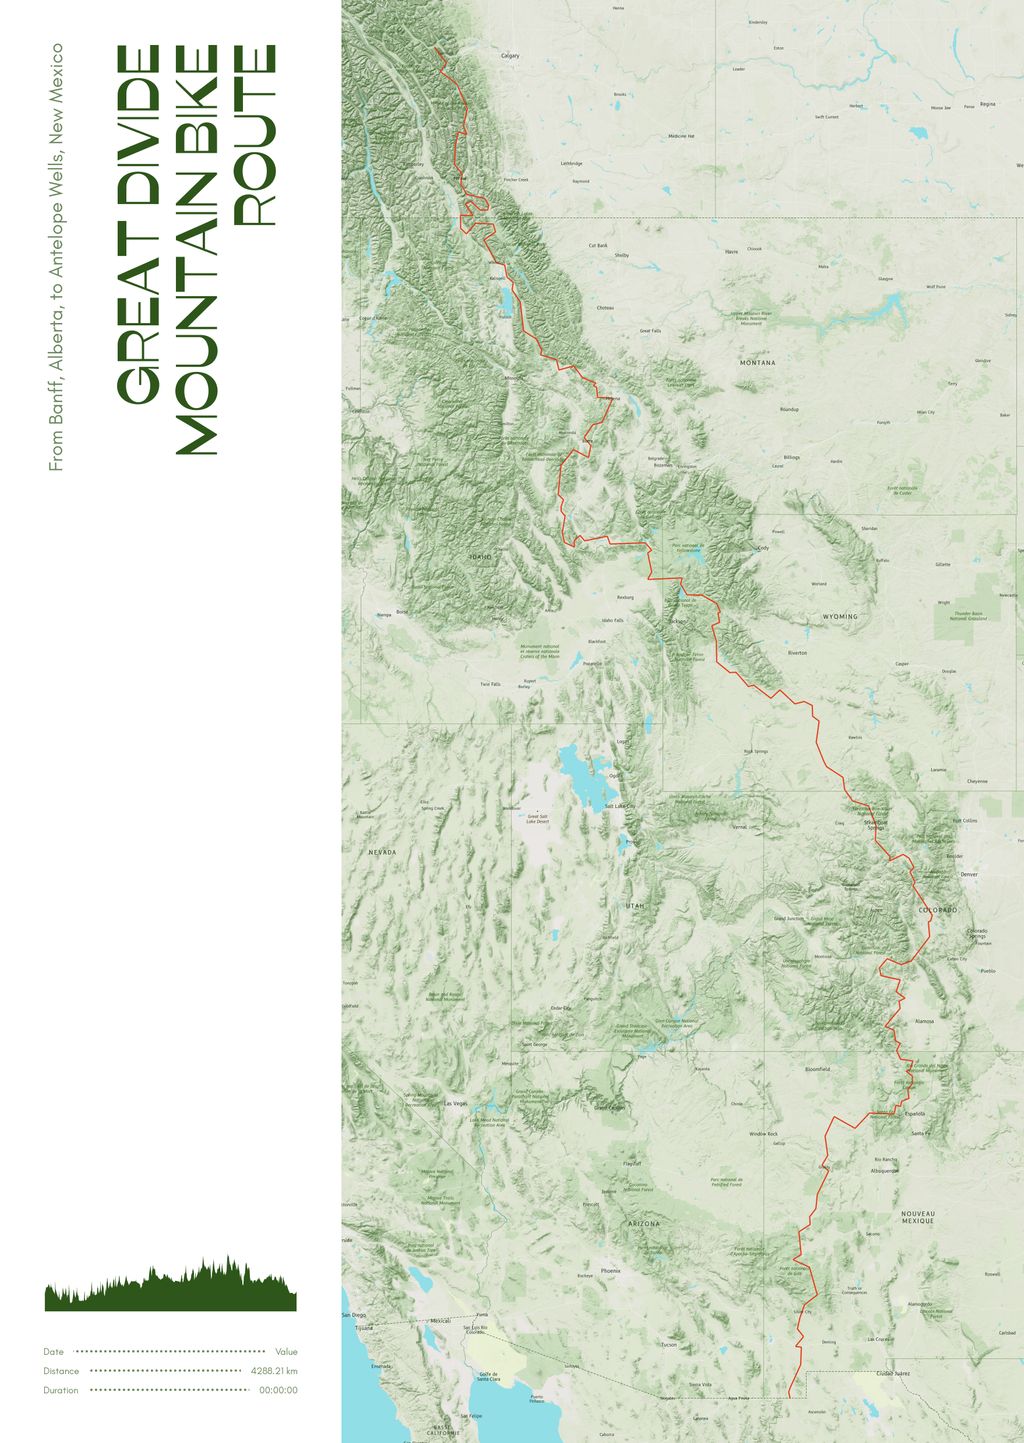 Poster cartographique du Great Divide
Mountain Bike 
Route